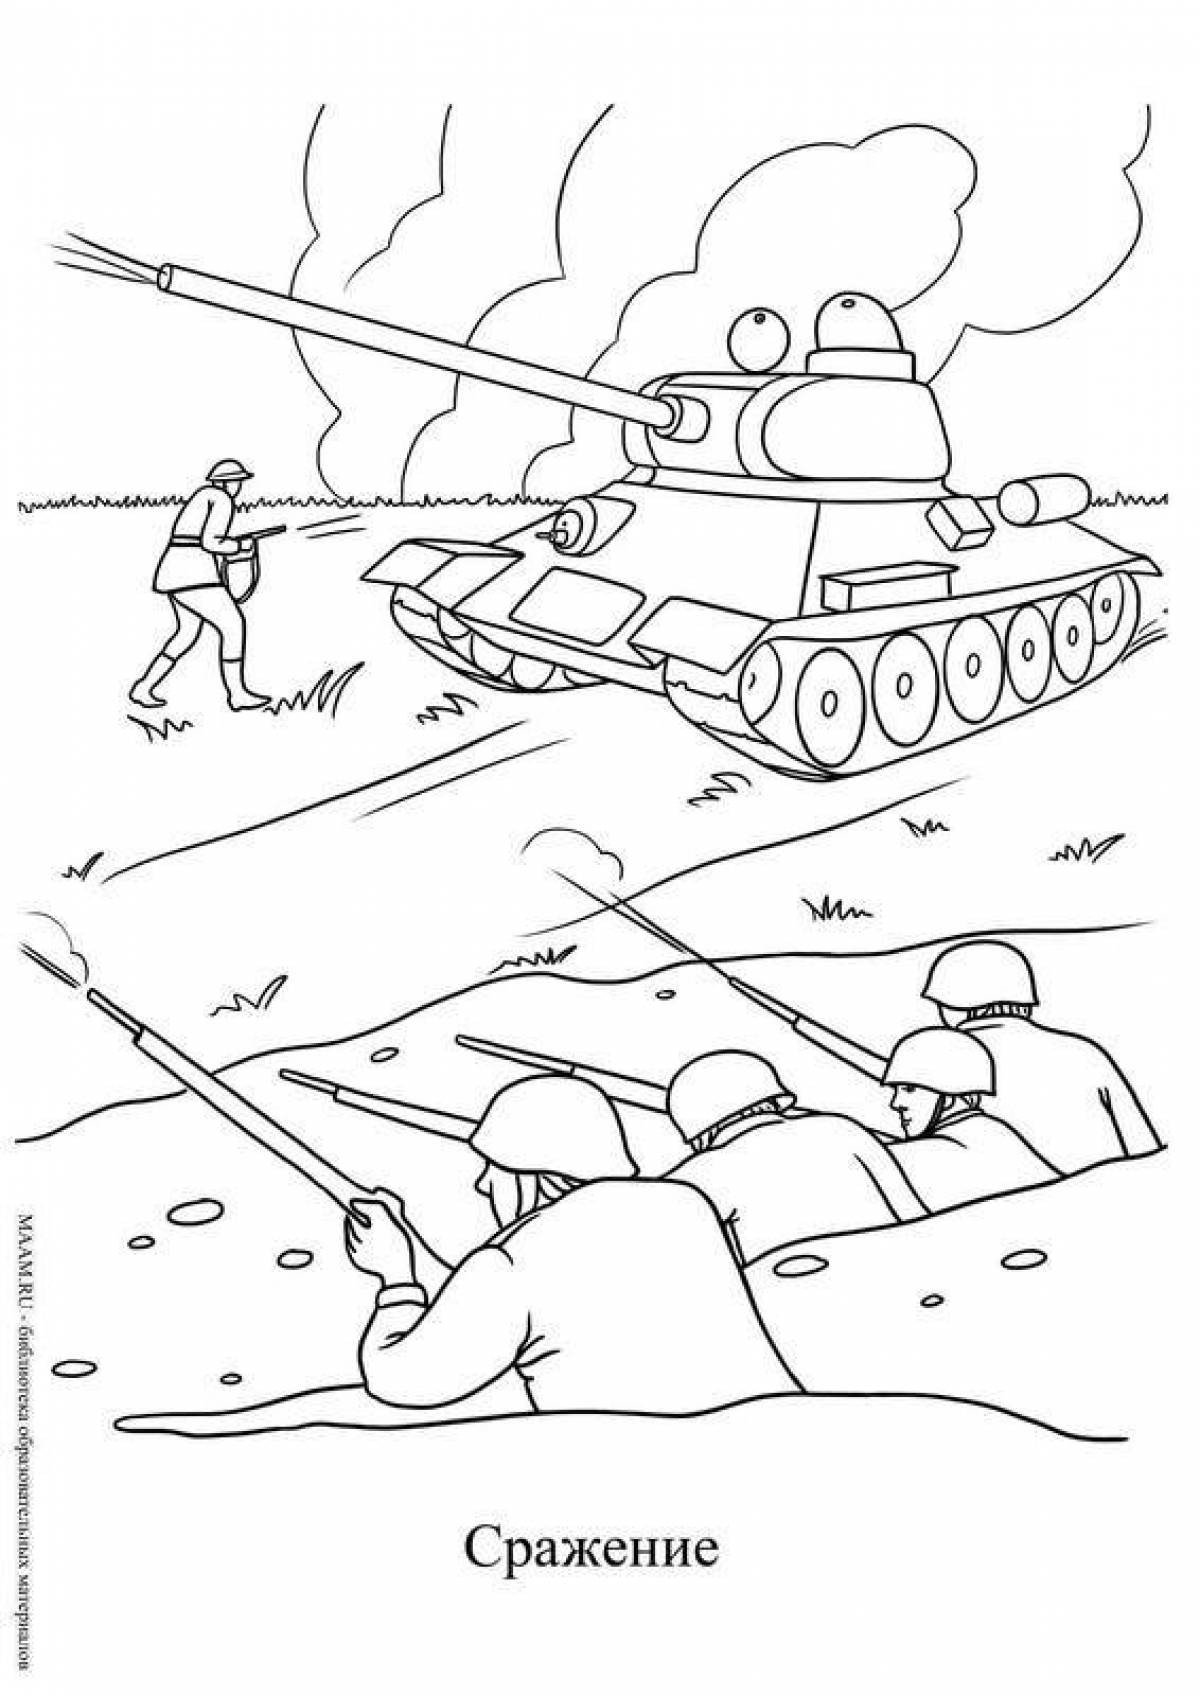 On the Battle of Stalingrad #6